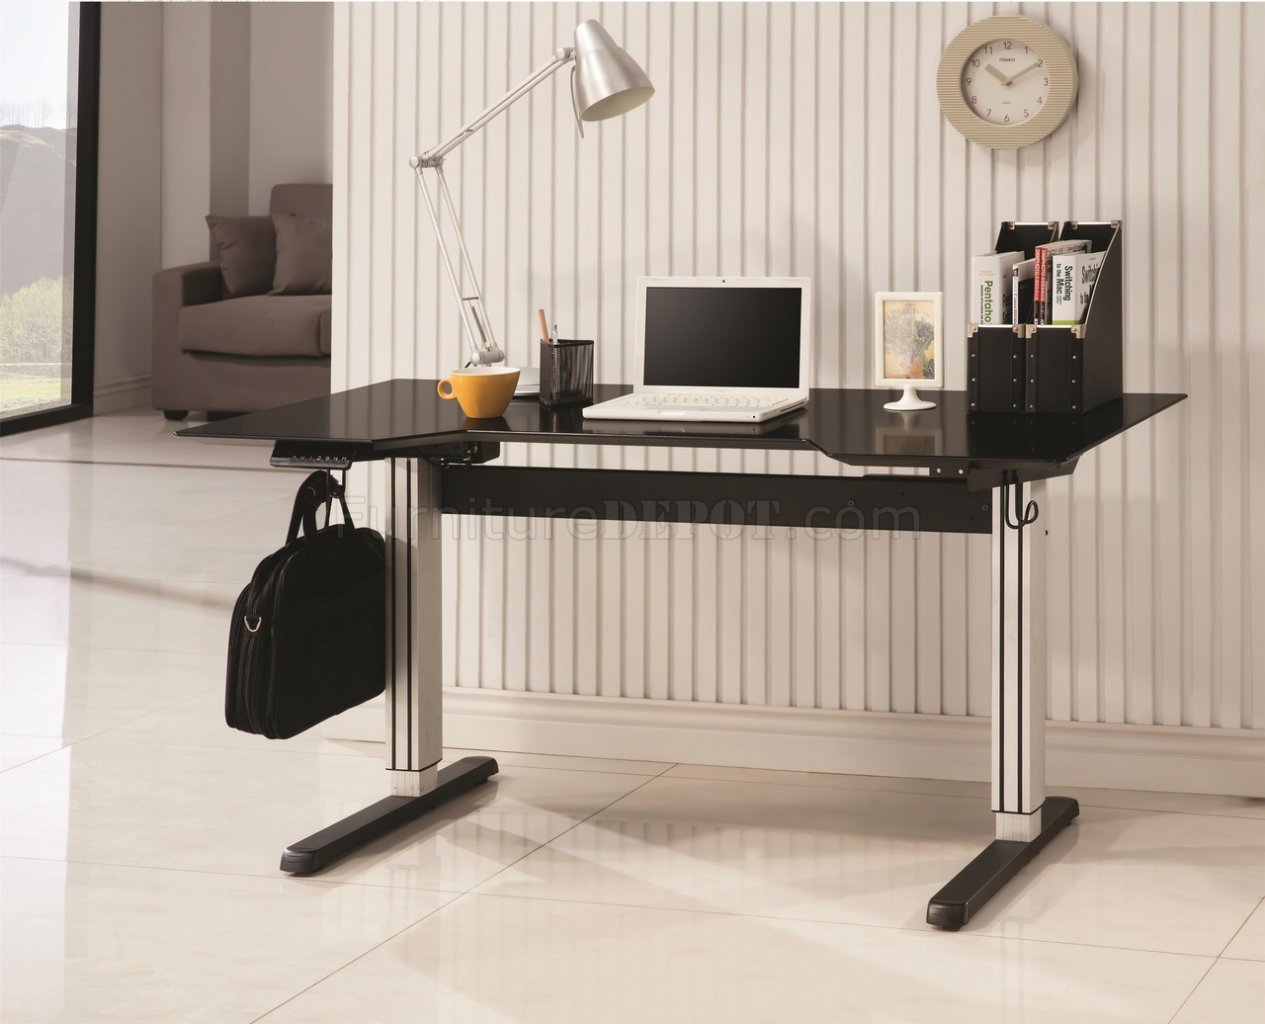 801315 Office Desk In Black Silver Tone W Adjustable Height